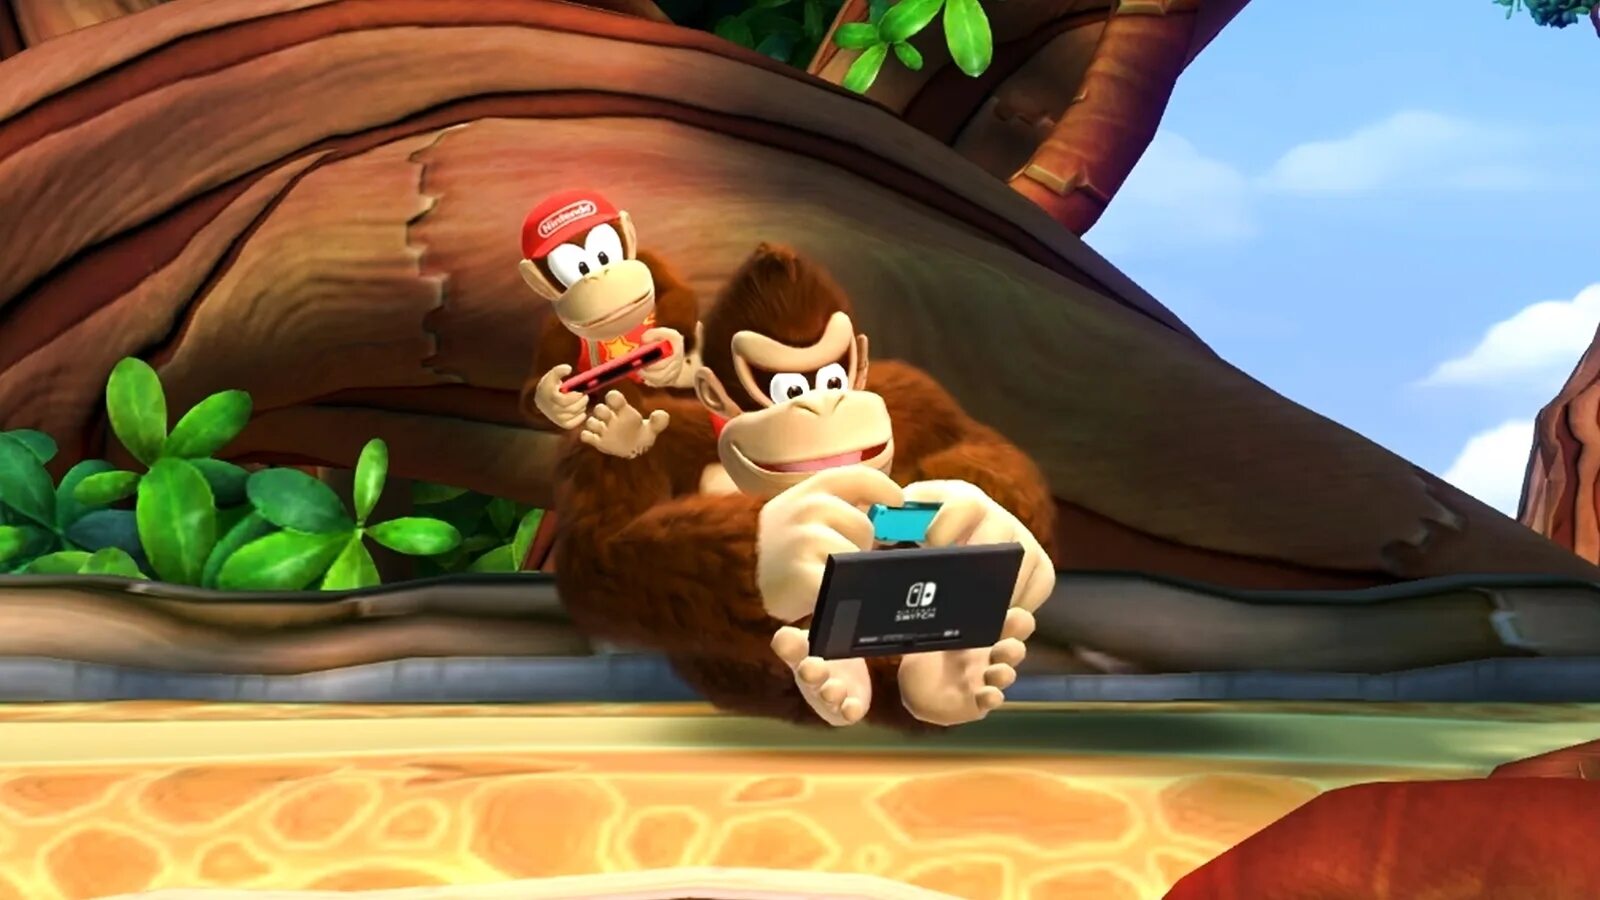 Донки Конг Нинтендо свитч. Donkey Kong на Нинтендо свитч. Донки Конг игра Нинтендо. Картридж Nintendo Switch Donkey Kong Country: Tropical Freeze.